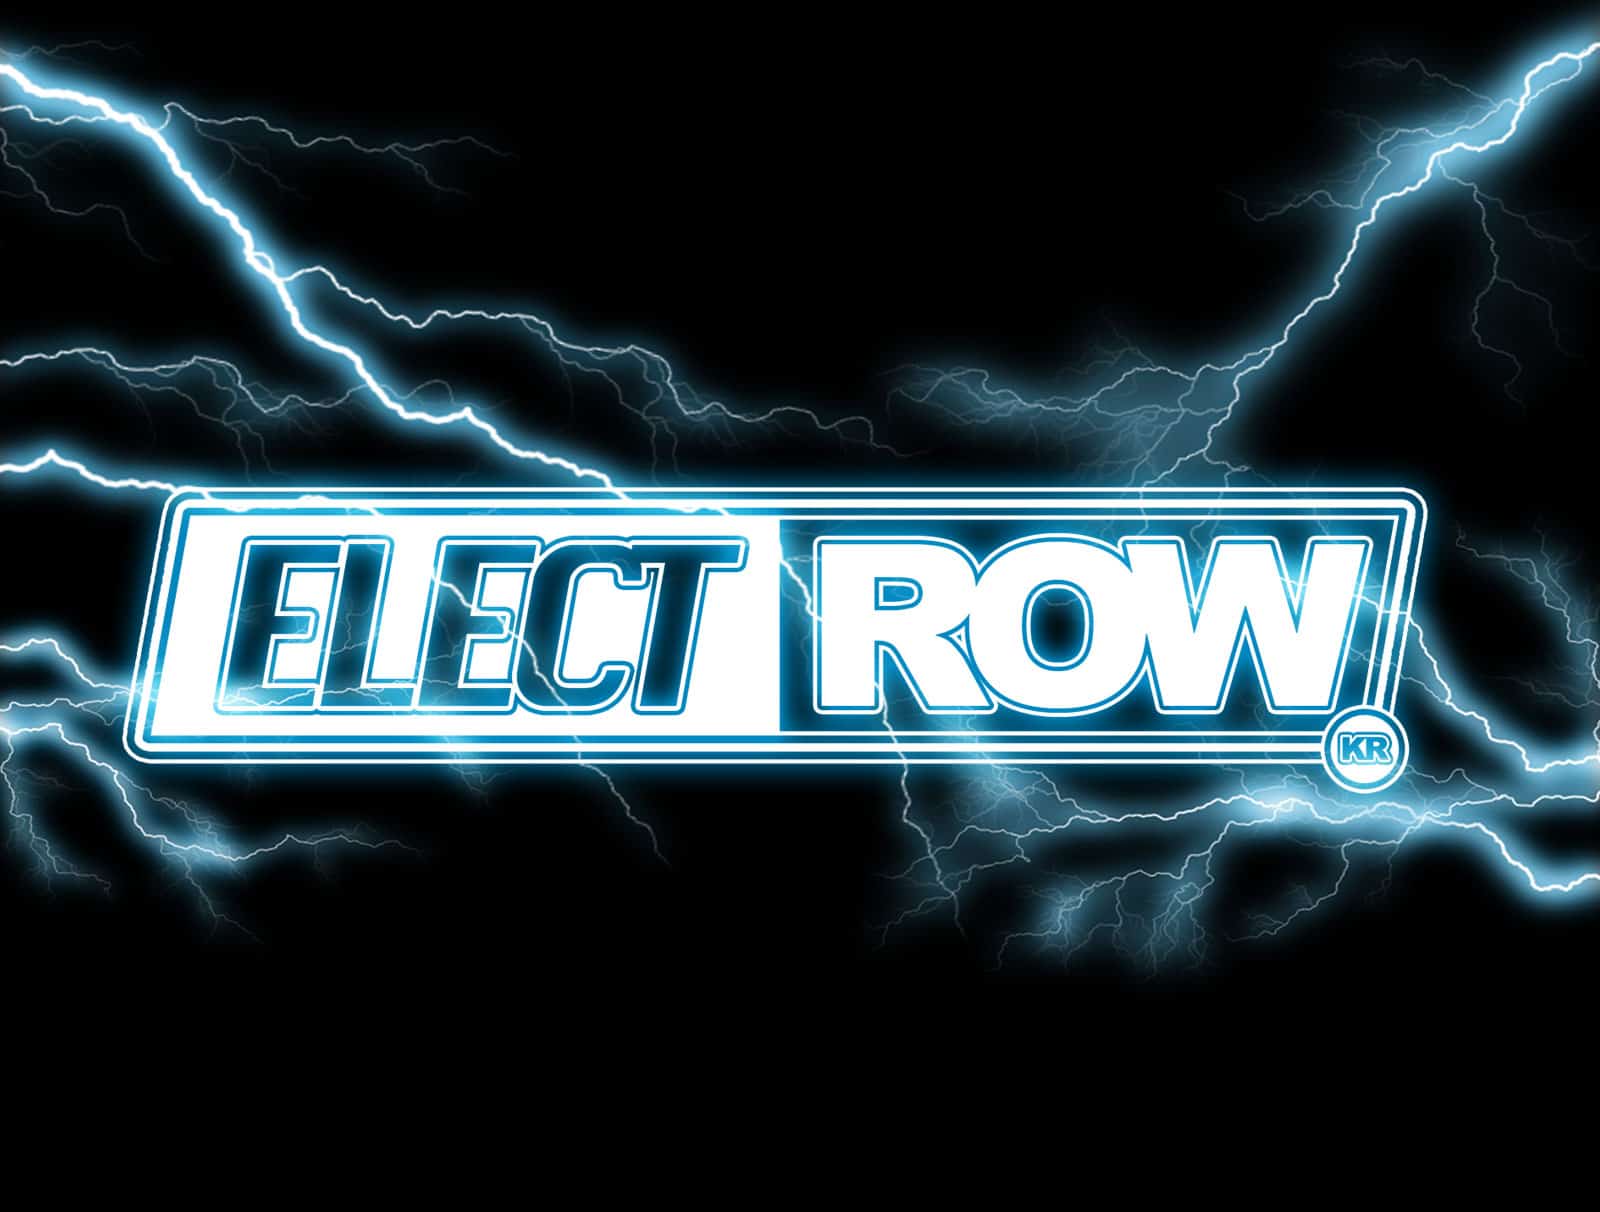 Elect Row